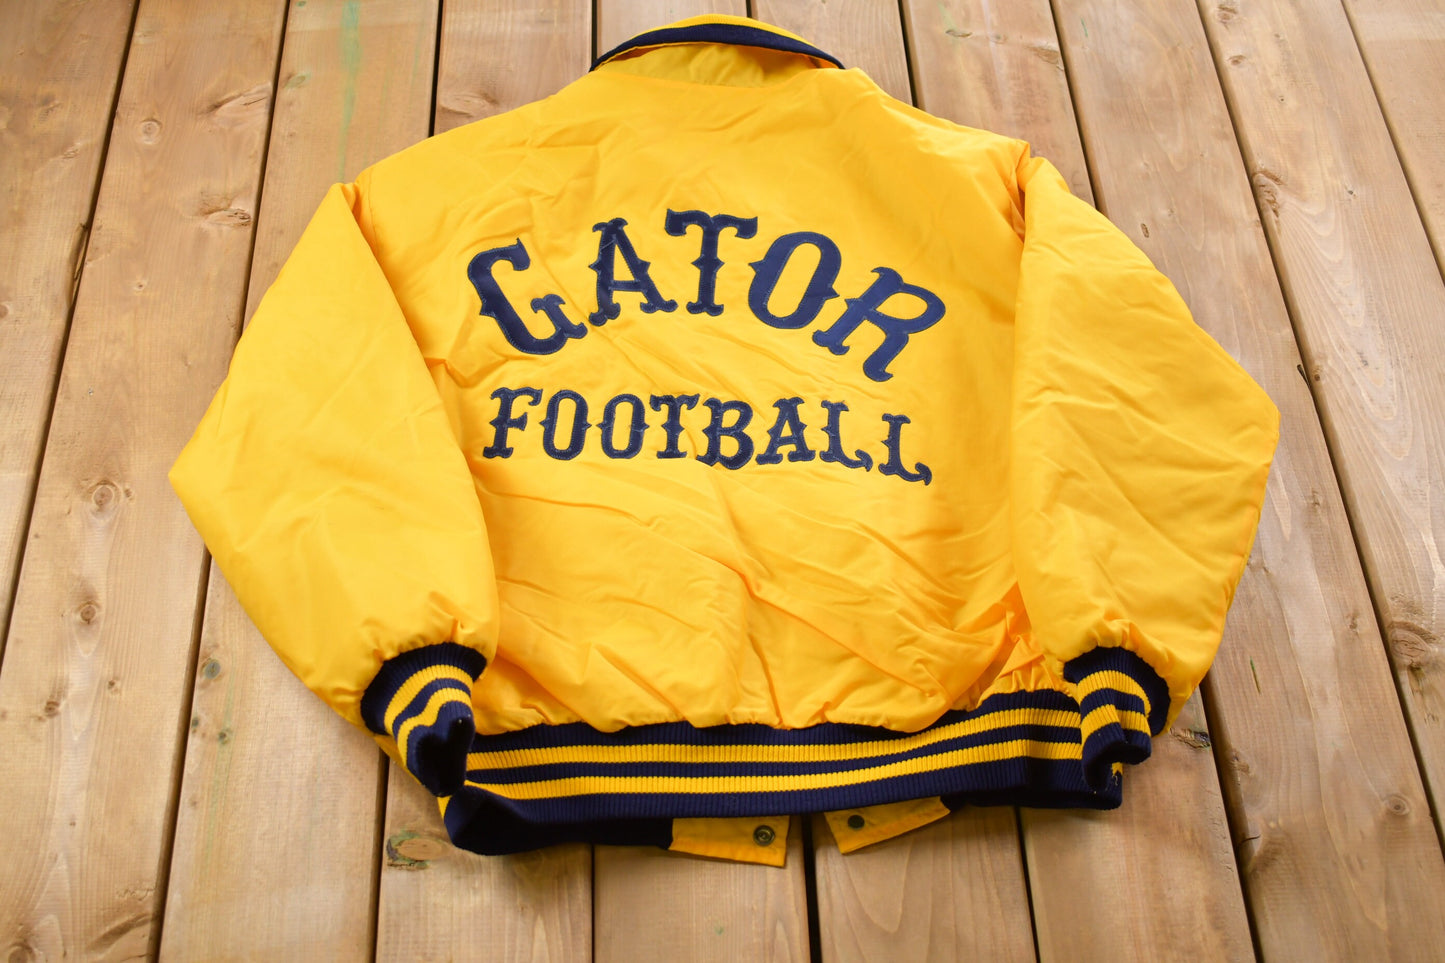 Vintage 1990s Delong Gator Football Varsity Jacket / Athleisure Sportswear / Streetwear Fashion / Automotive Apparel / Made In USA